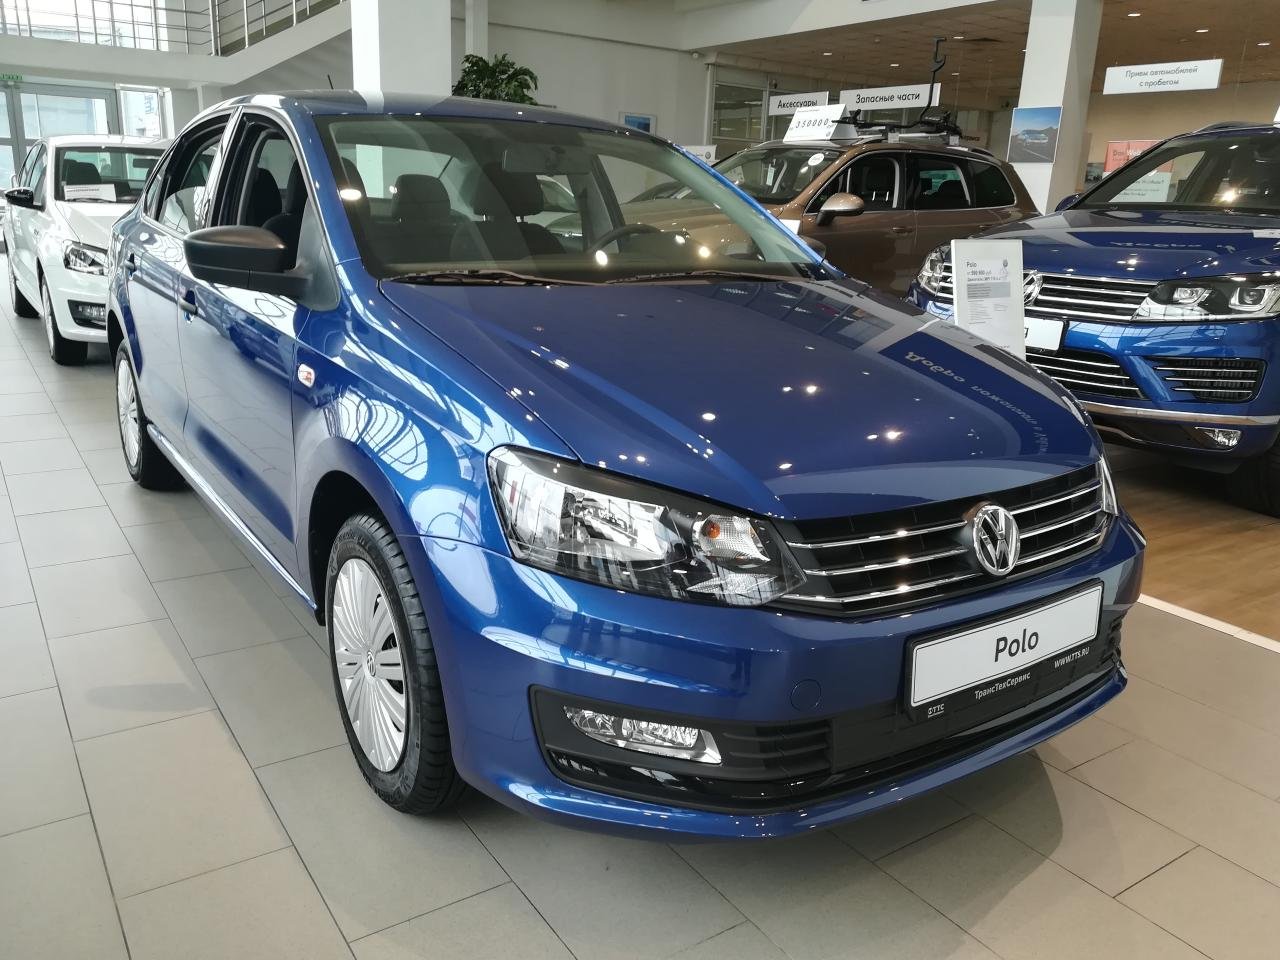 Volkswagen синий. Volkswagen Polo синий. Фольксваген поло поло синий. Фольксваген поло синий металлик. Фольксваген поло синий металлик 2021.